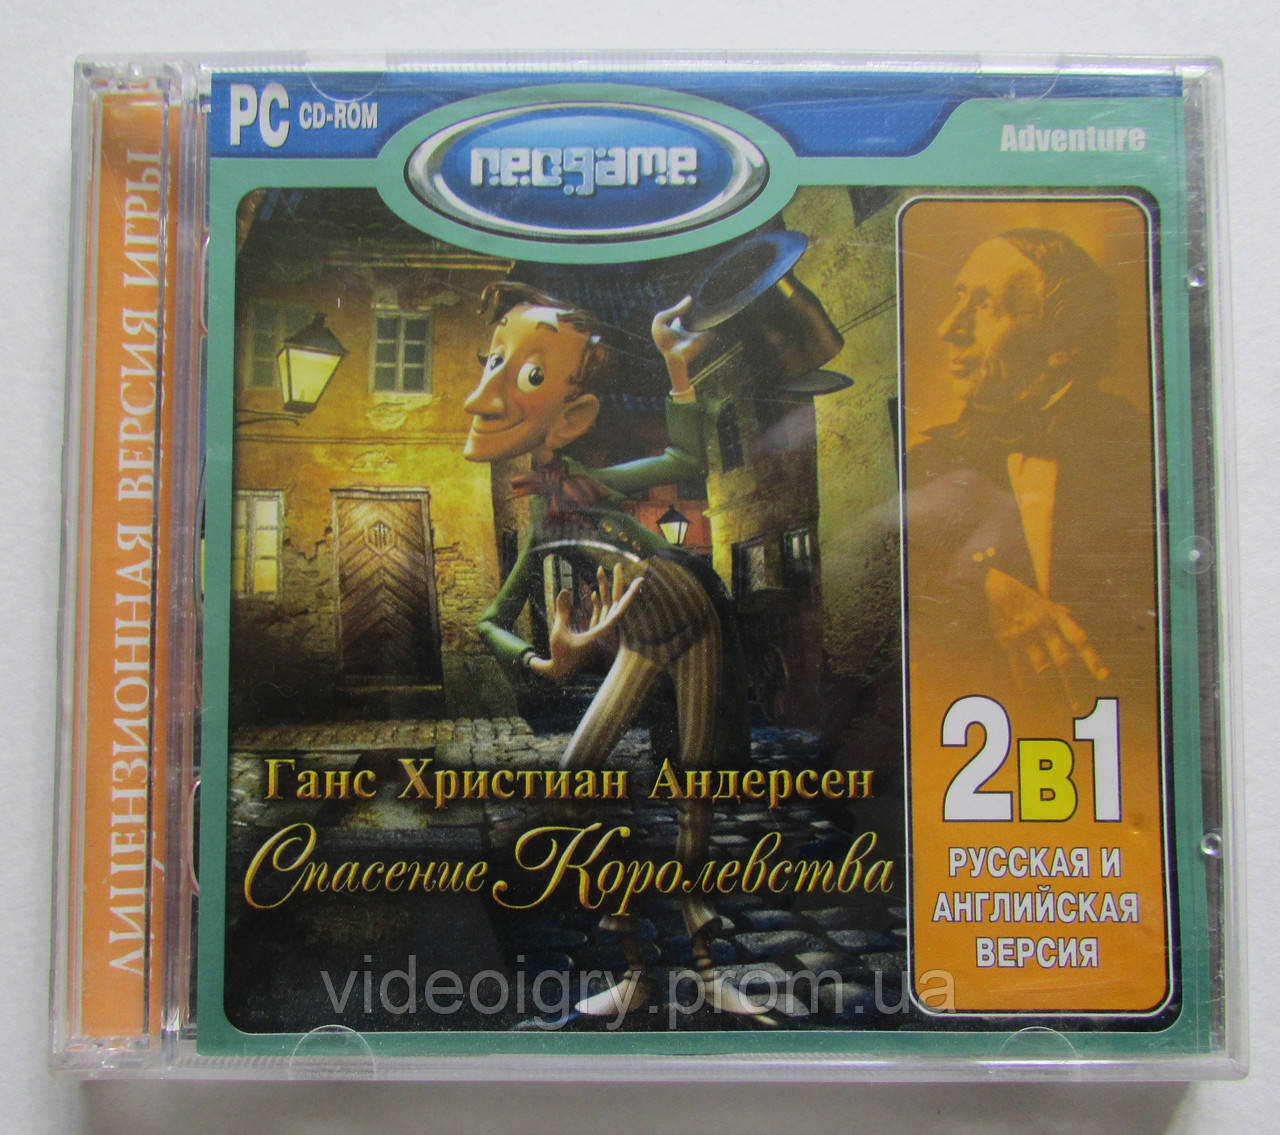 Hans Christian Anderson Saving The Kingdom PC CD-ROM, ліцензійна марка України V2